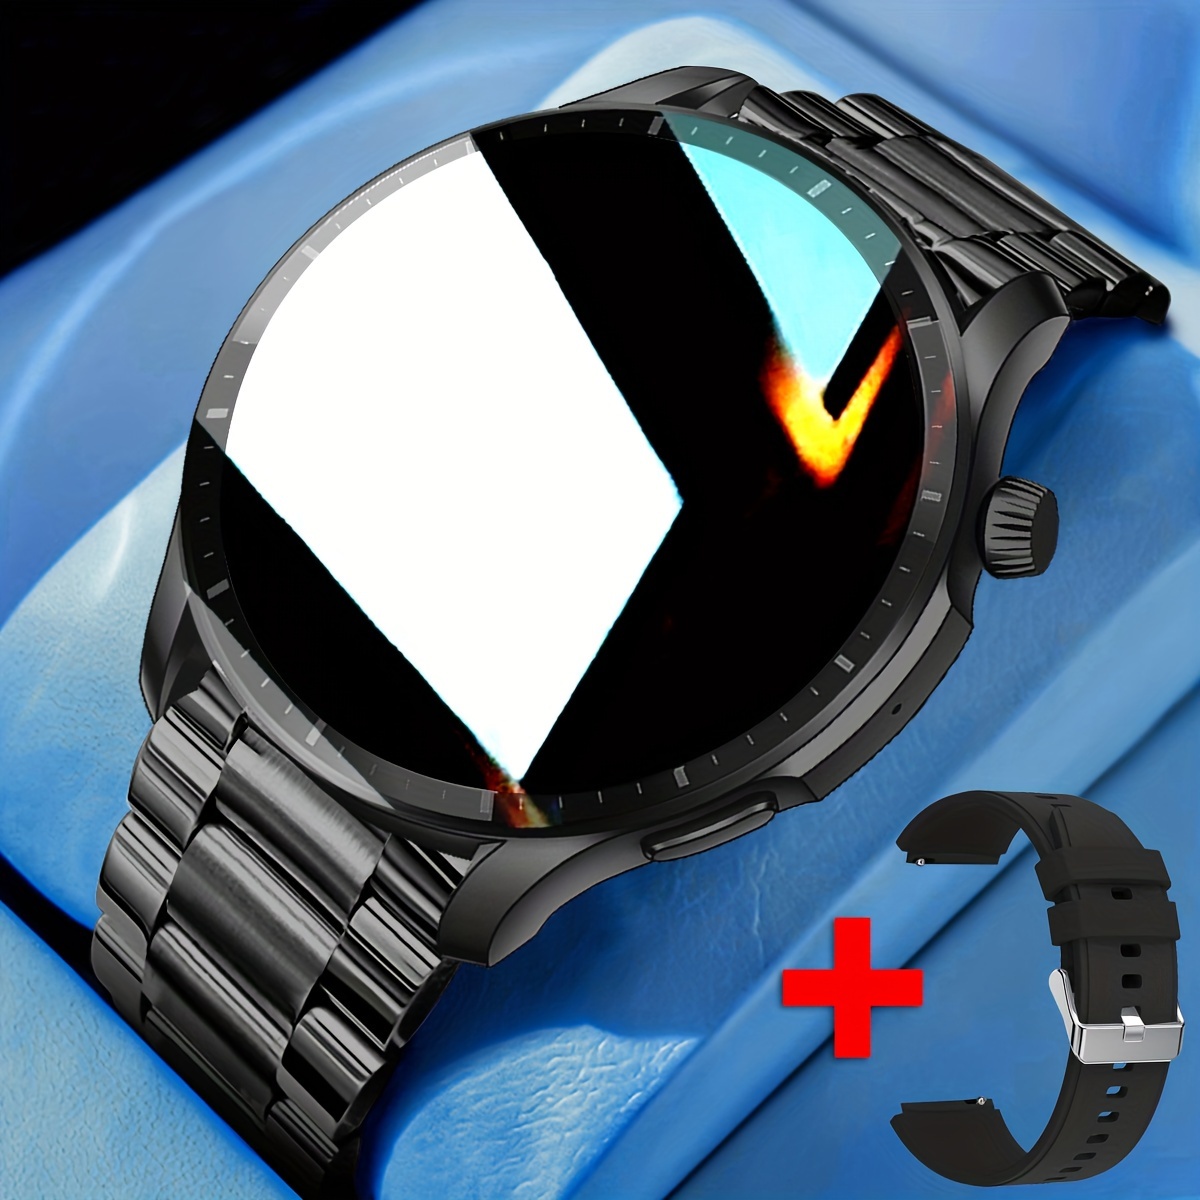 

Men Stainless Steel Bracelet Smart Watch With Call Message Reminder, Sport Mode, Waterproof Smartwatch